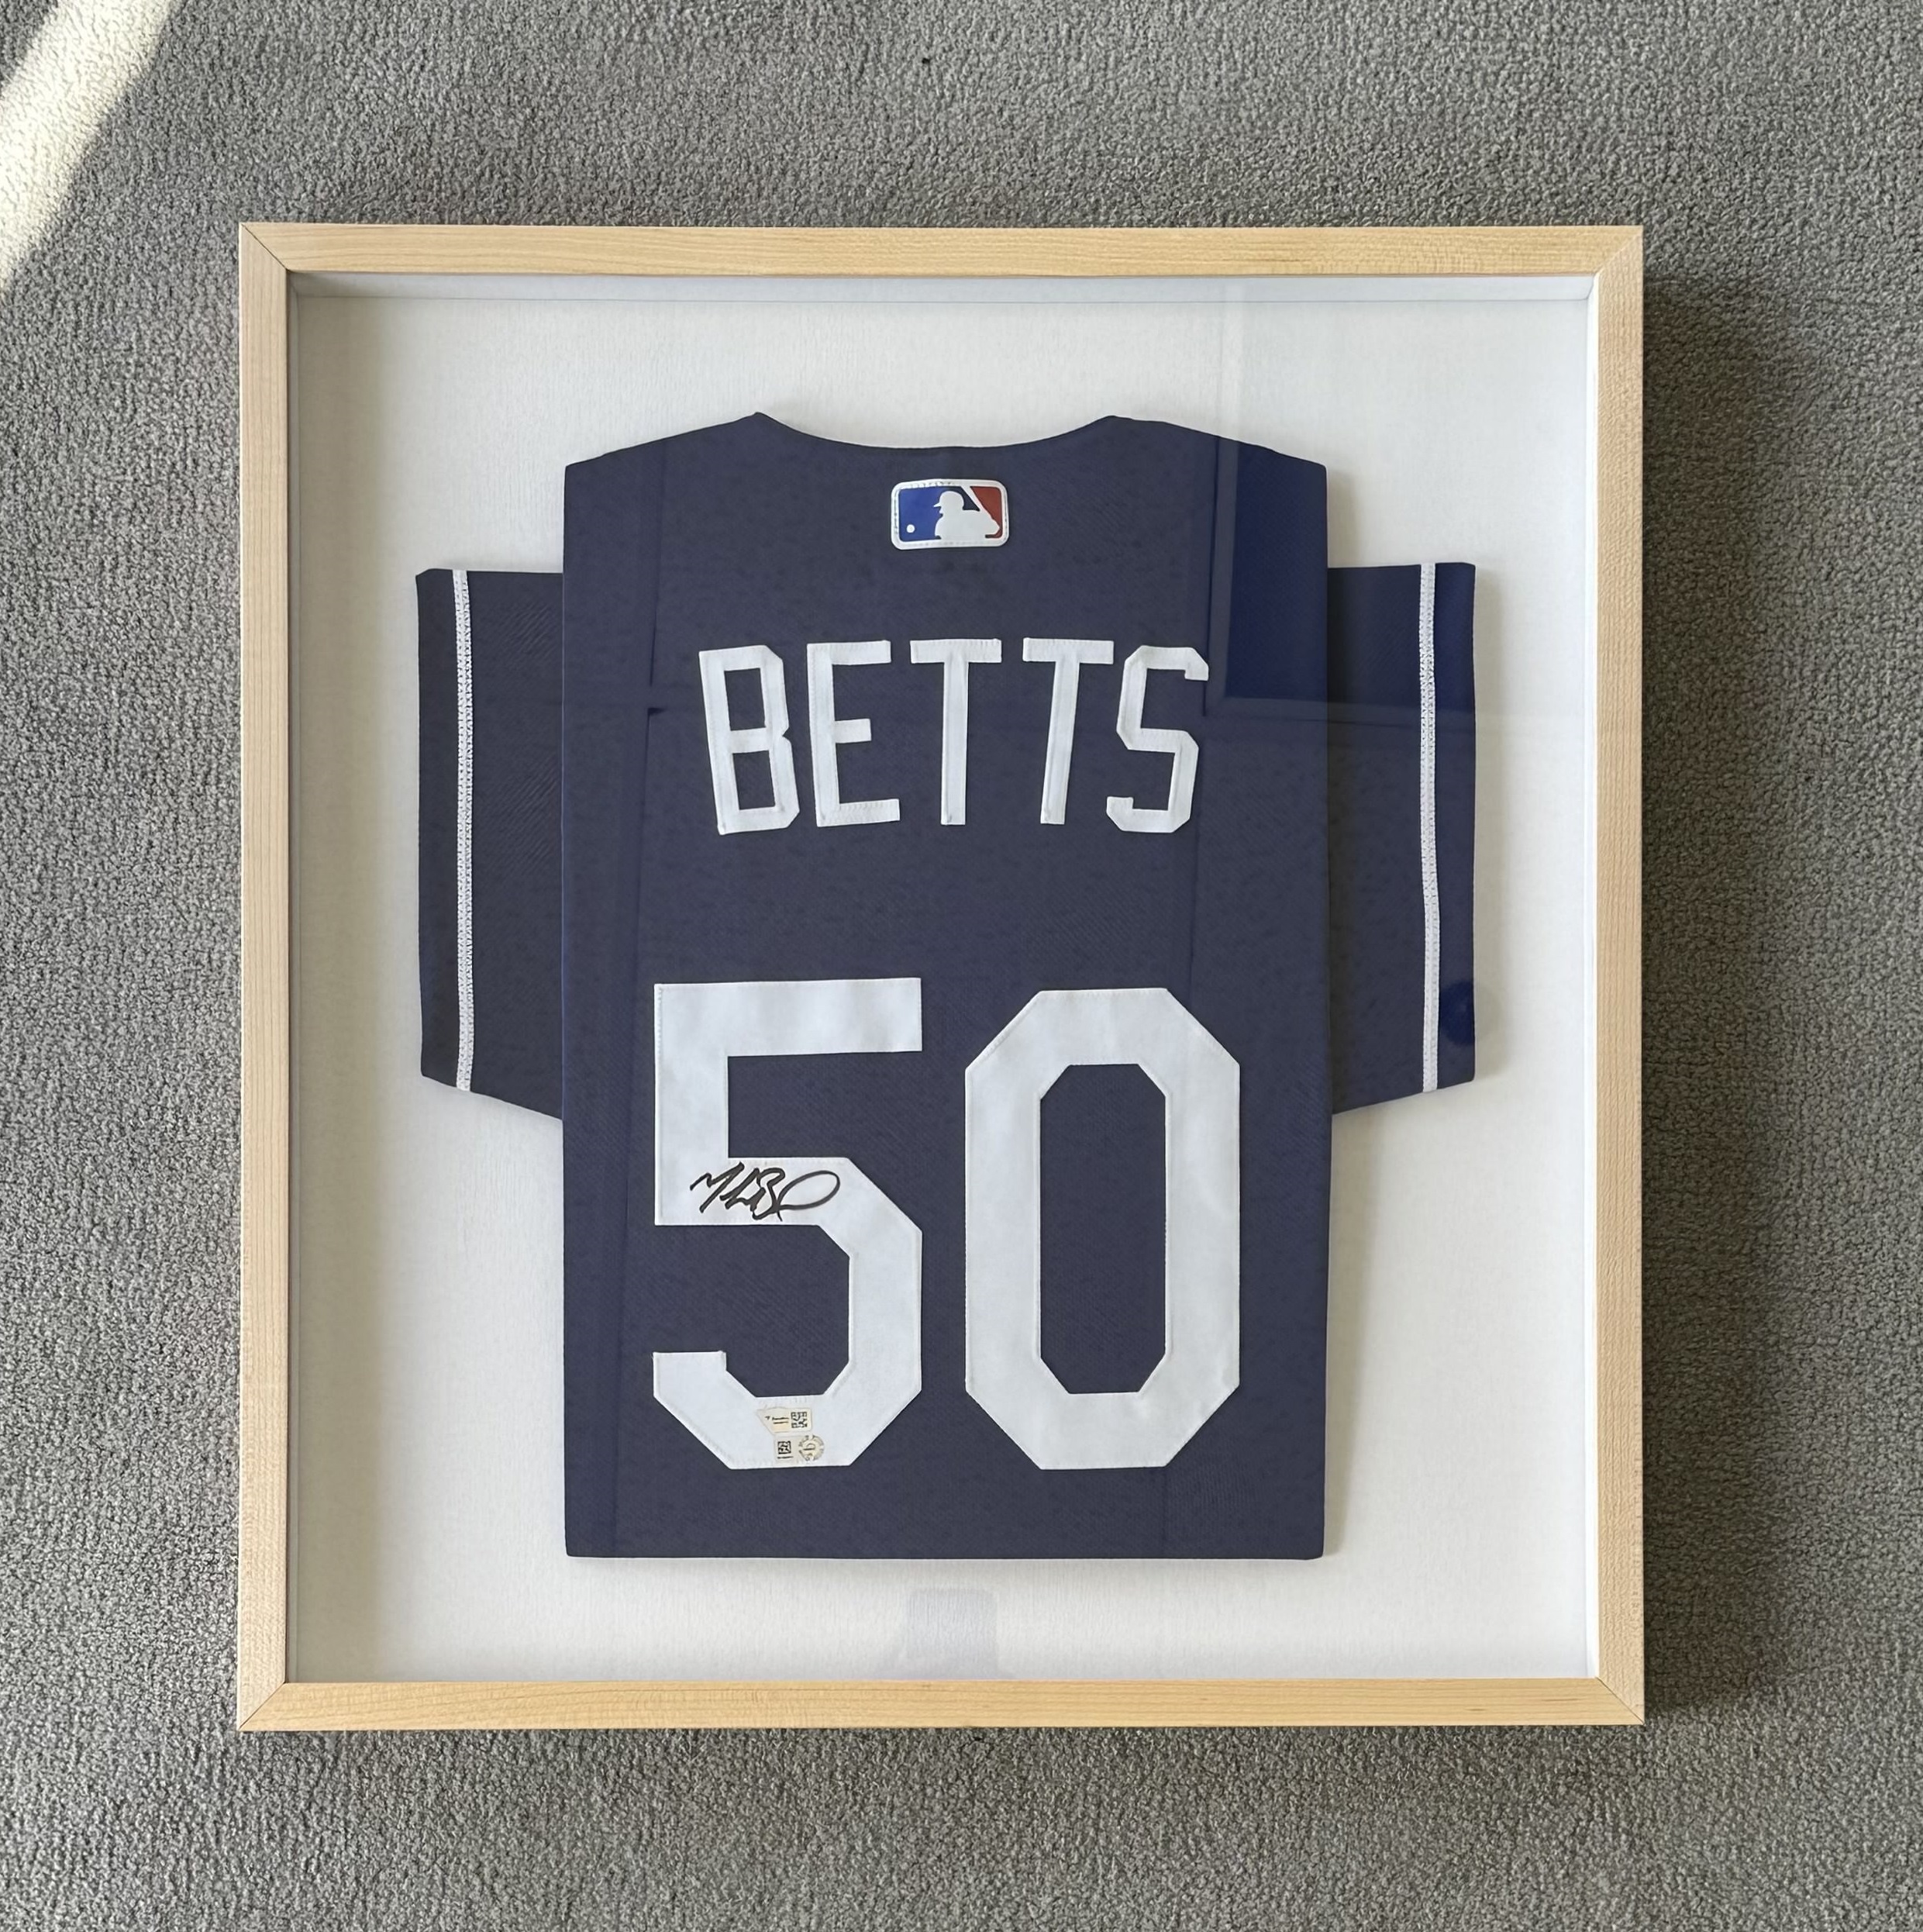 Betts 50 jersey in custom shadow box frame